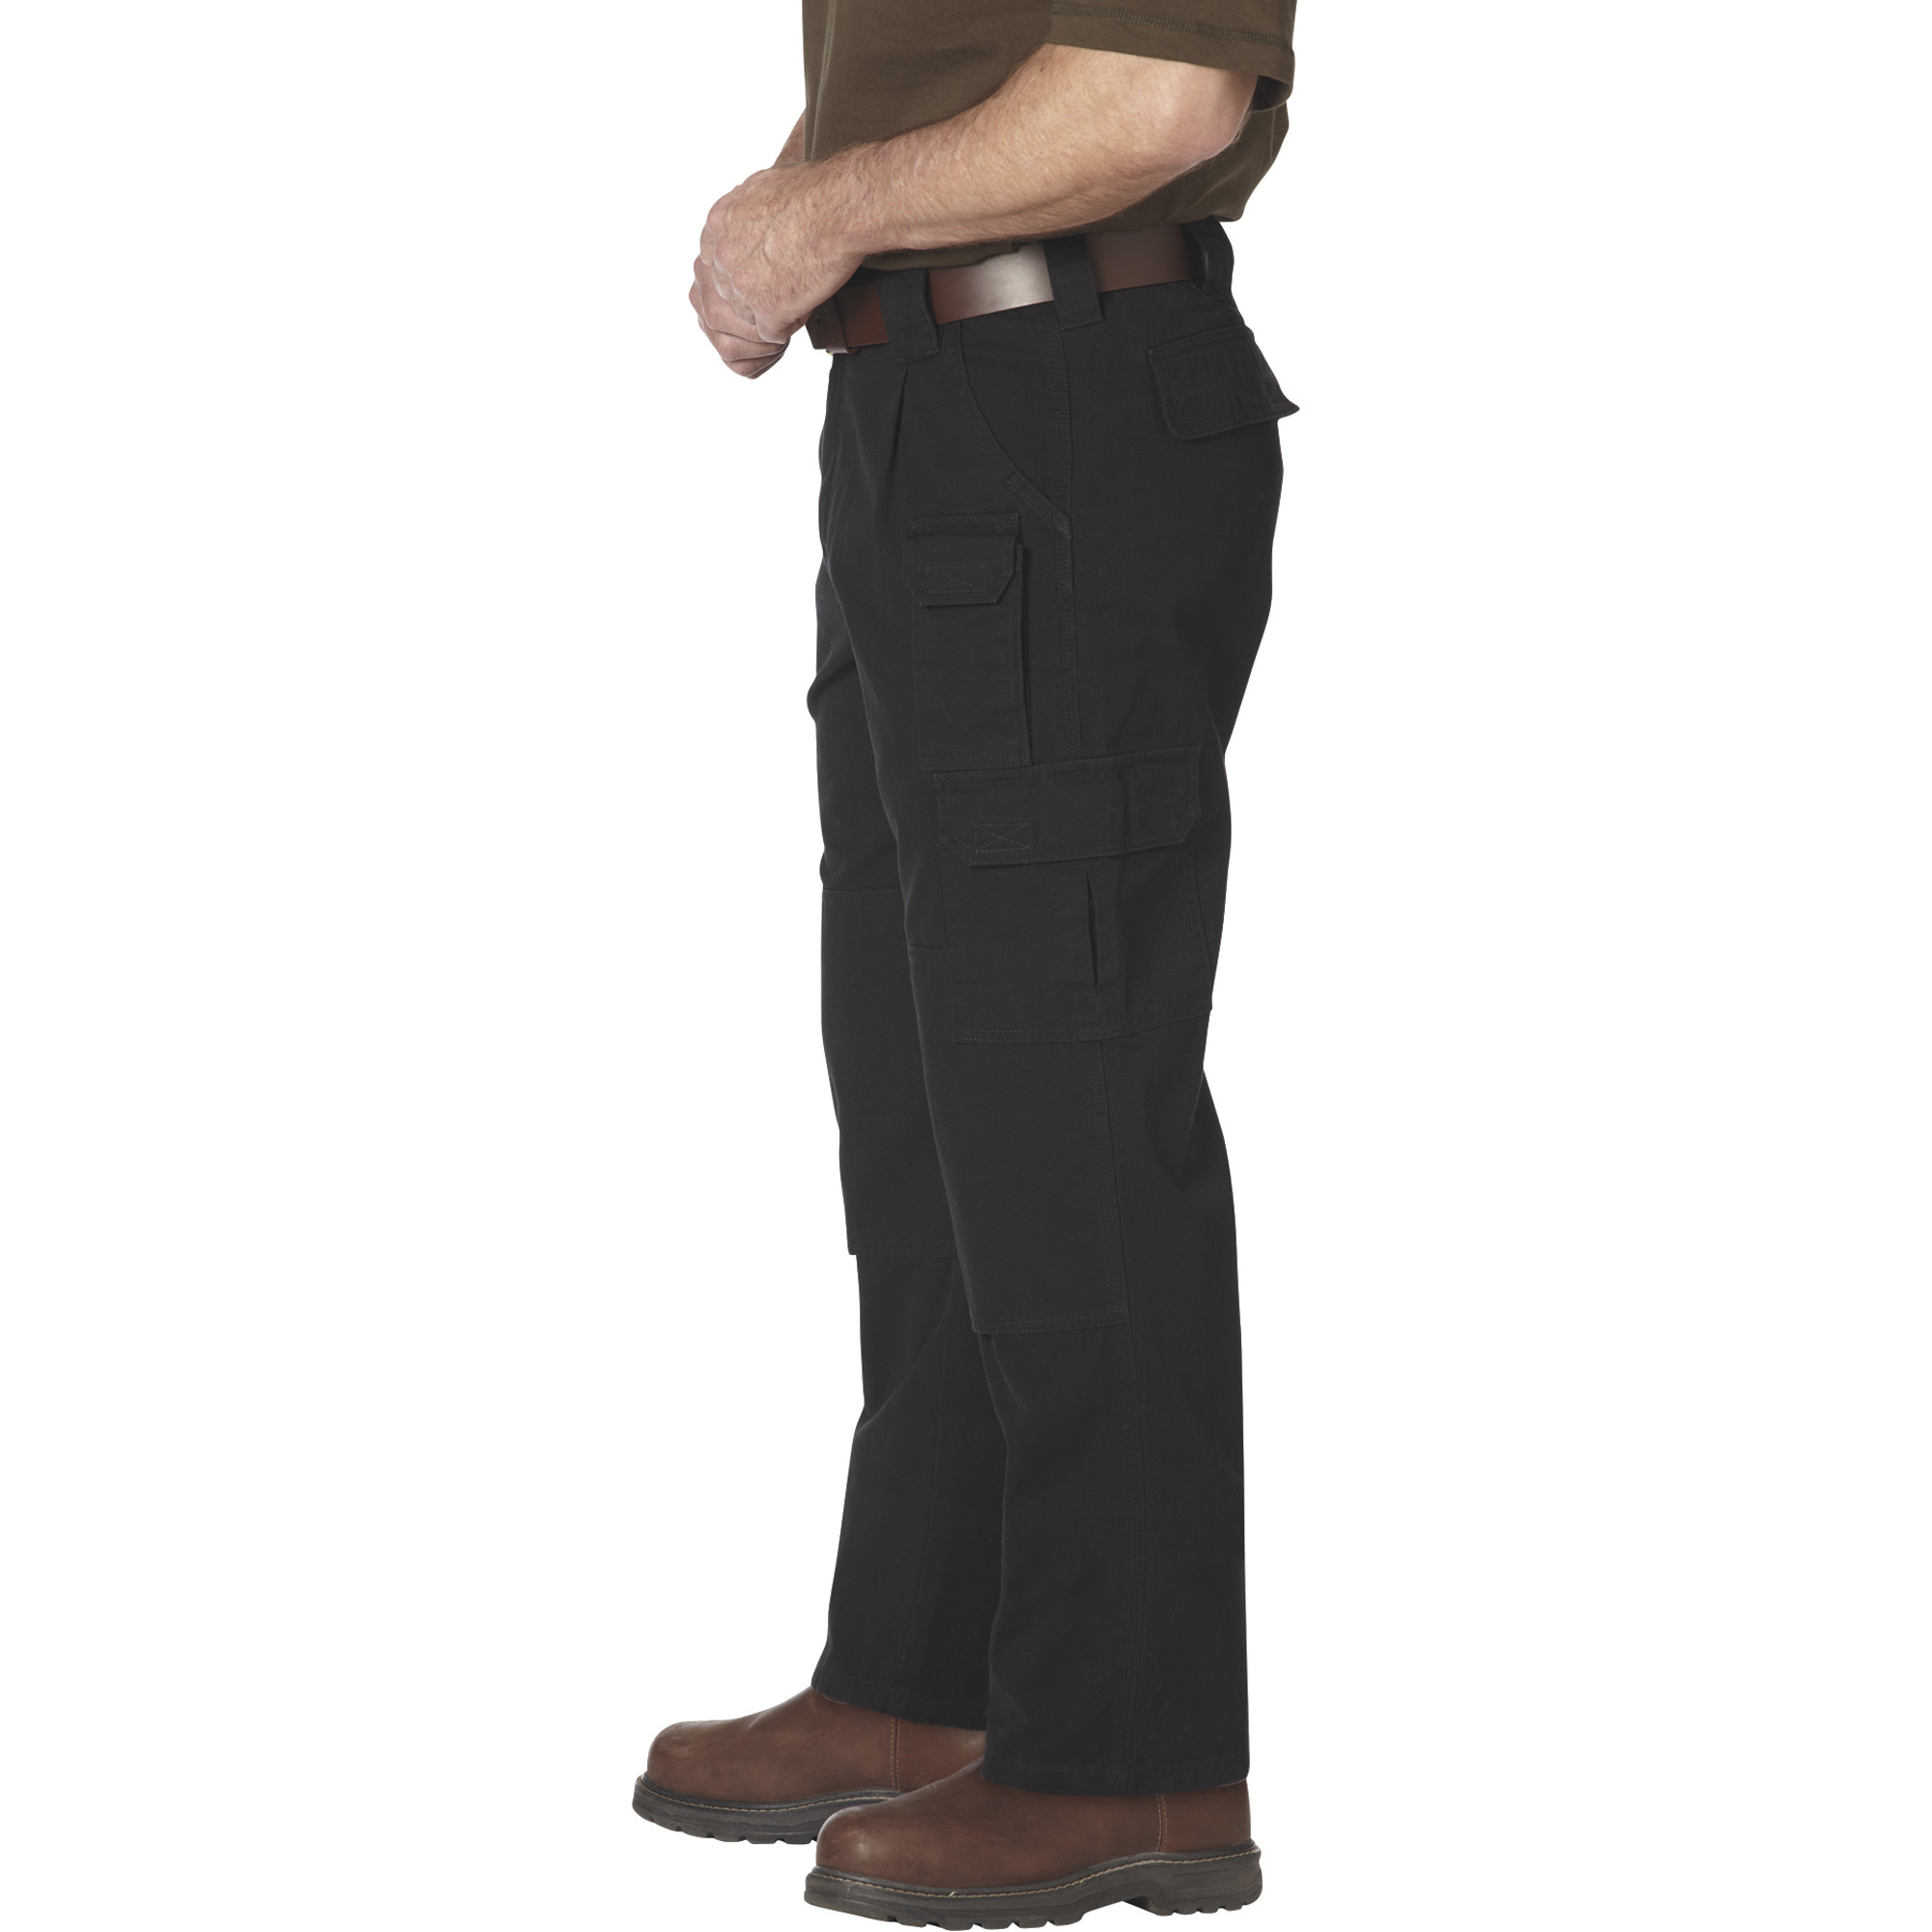 Gravel Gear Men's 7-Pocket Tactical Pants with Teflon - Black, 44Inch Waist x 30Inch Inseam